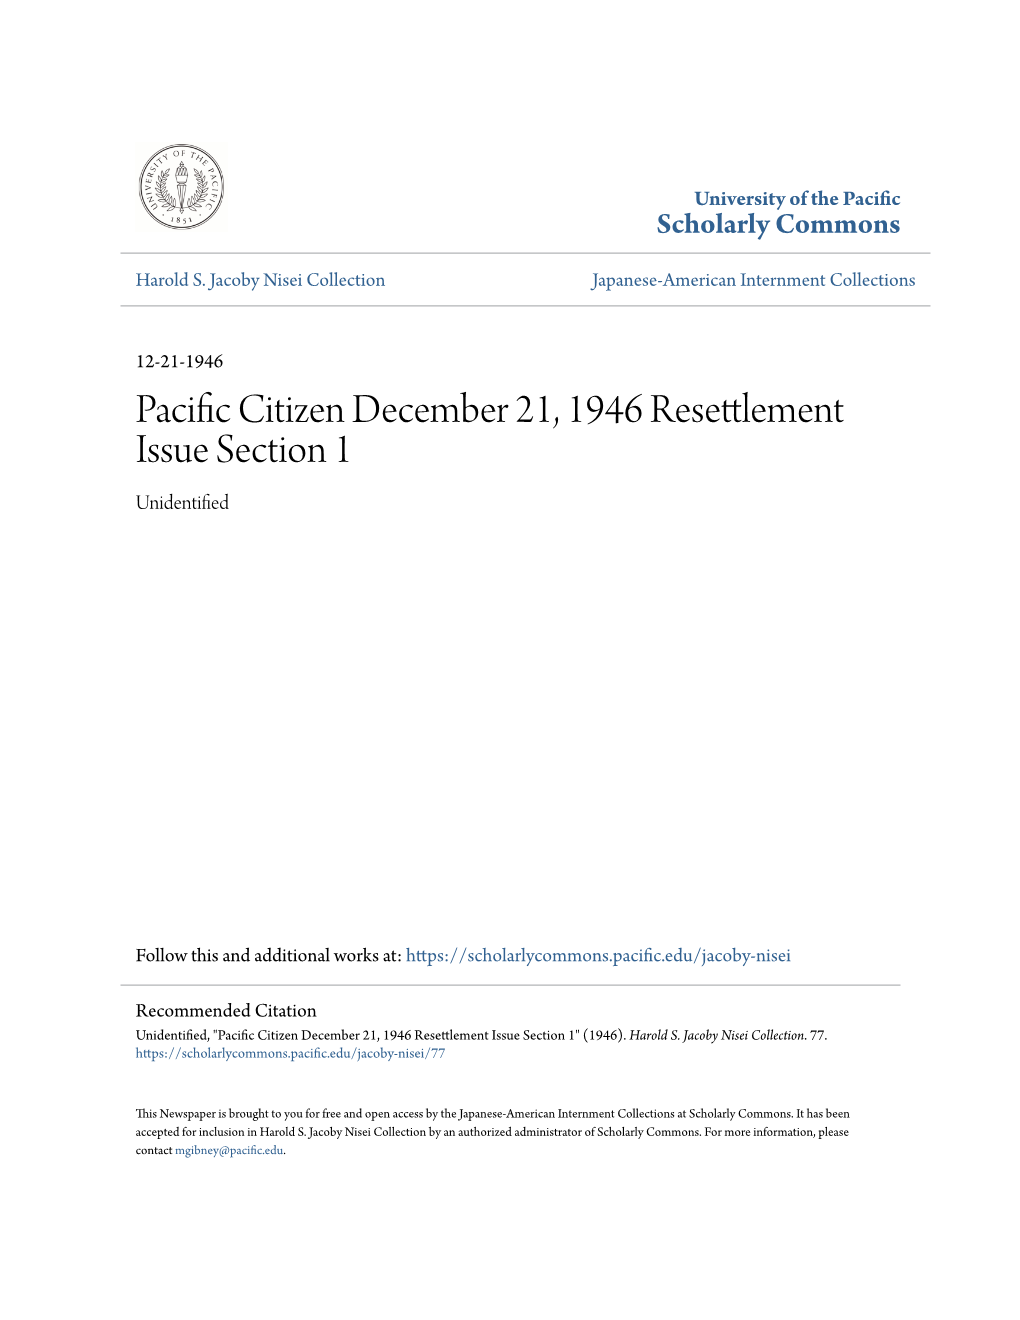 Pacific Citizen December 21, 1946 Resettlement Issue Section 1